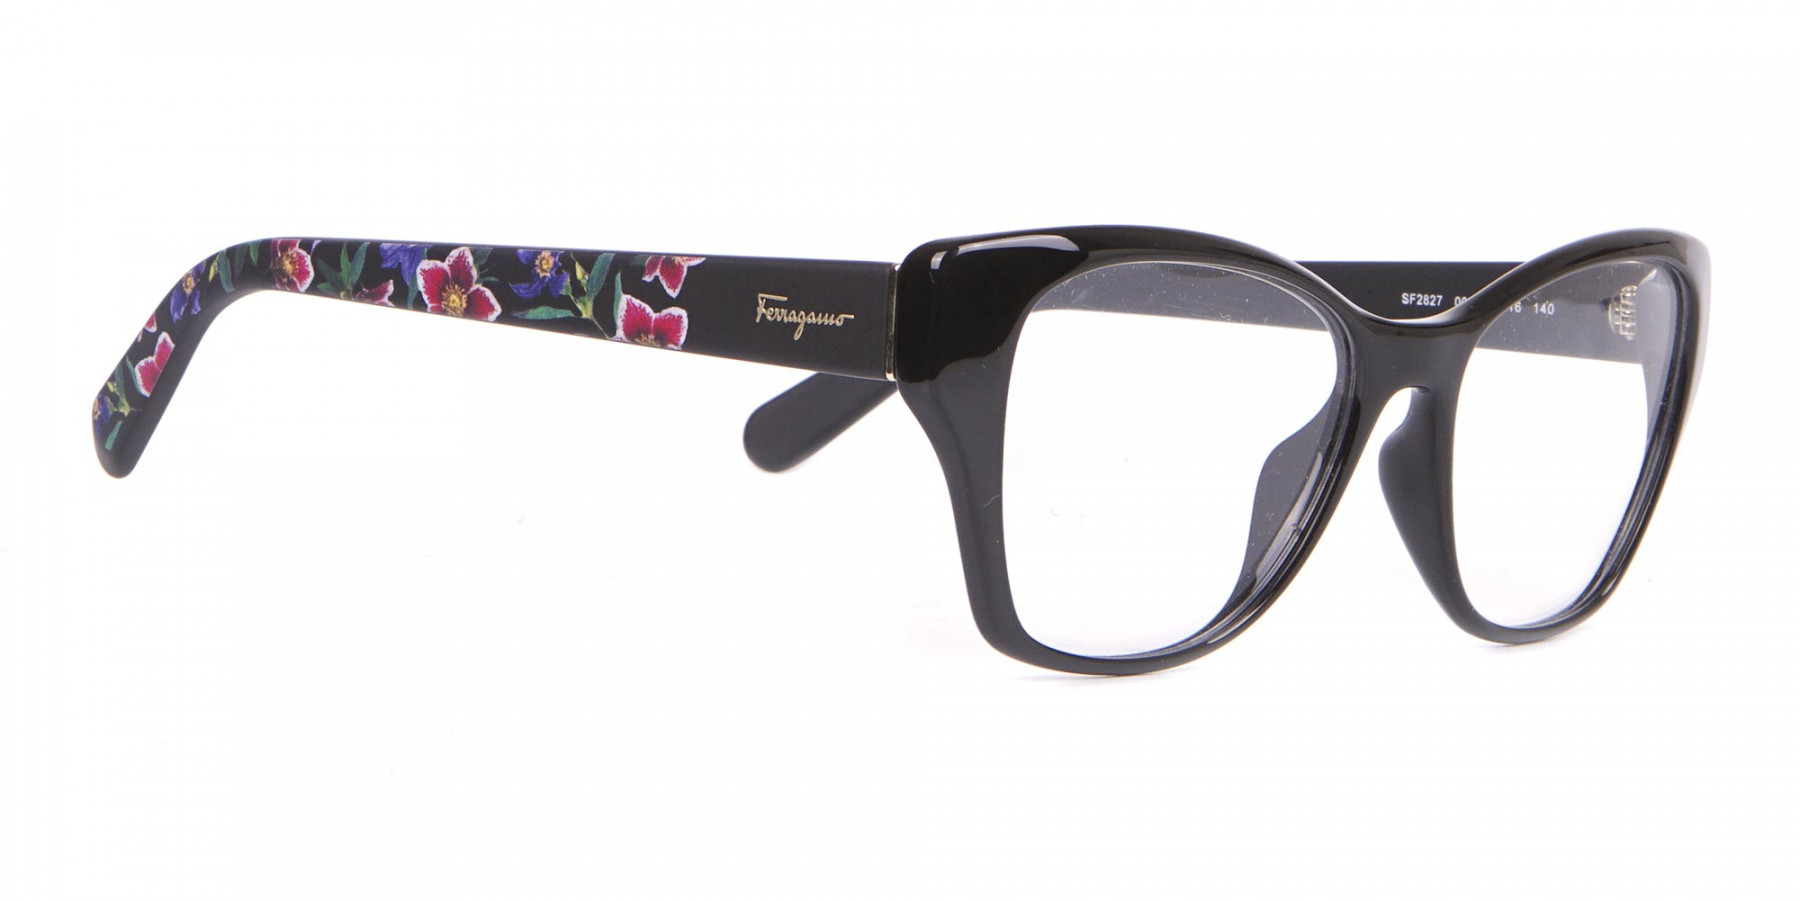 Salvatore Ferragamo SF2827 Cateye Wayfarer Glasses Black-1